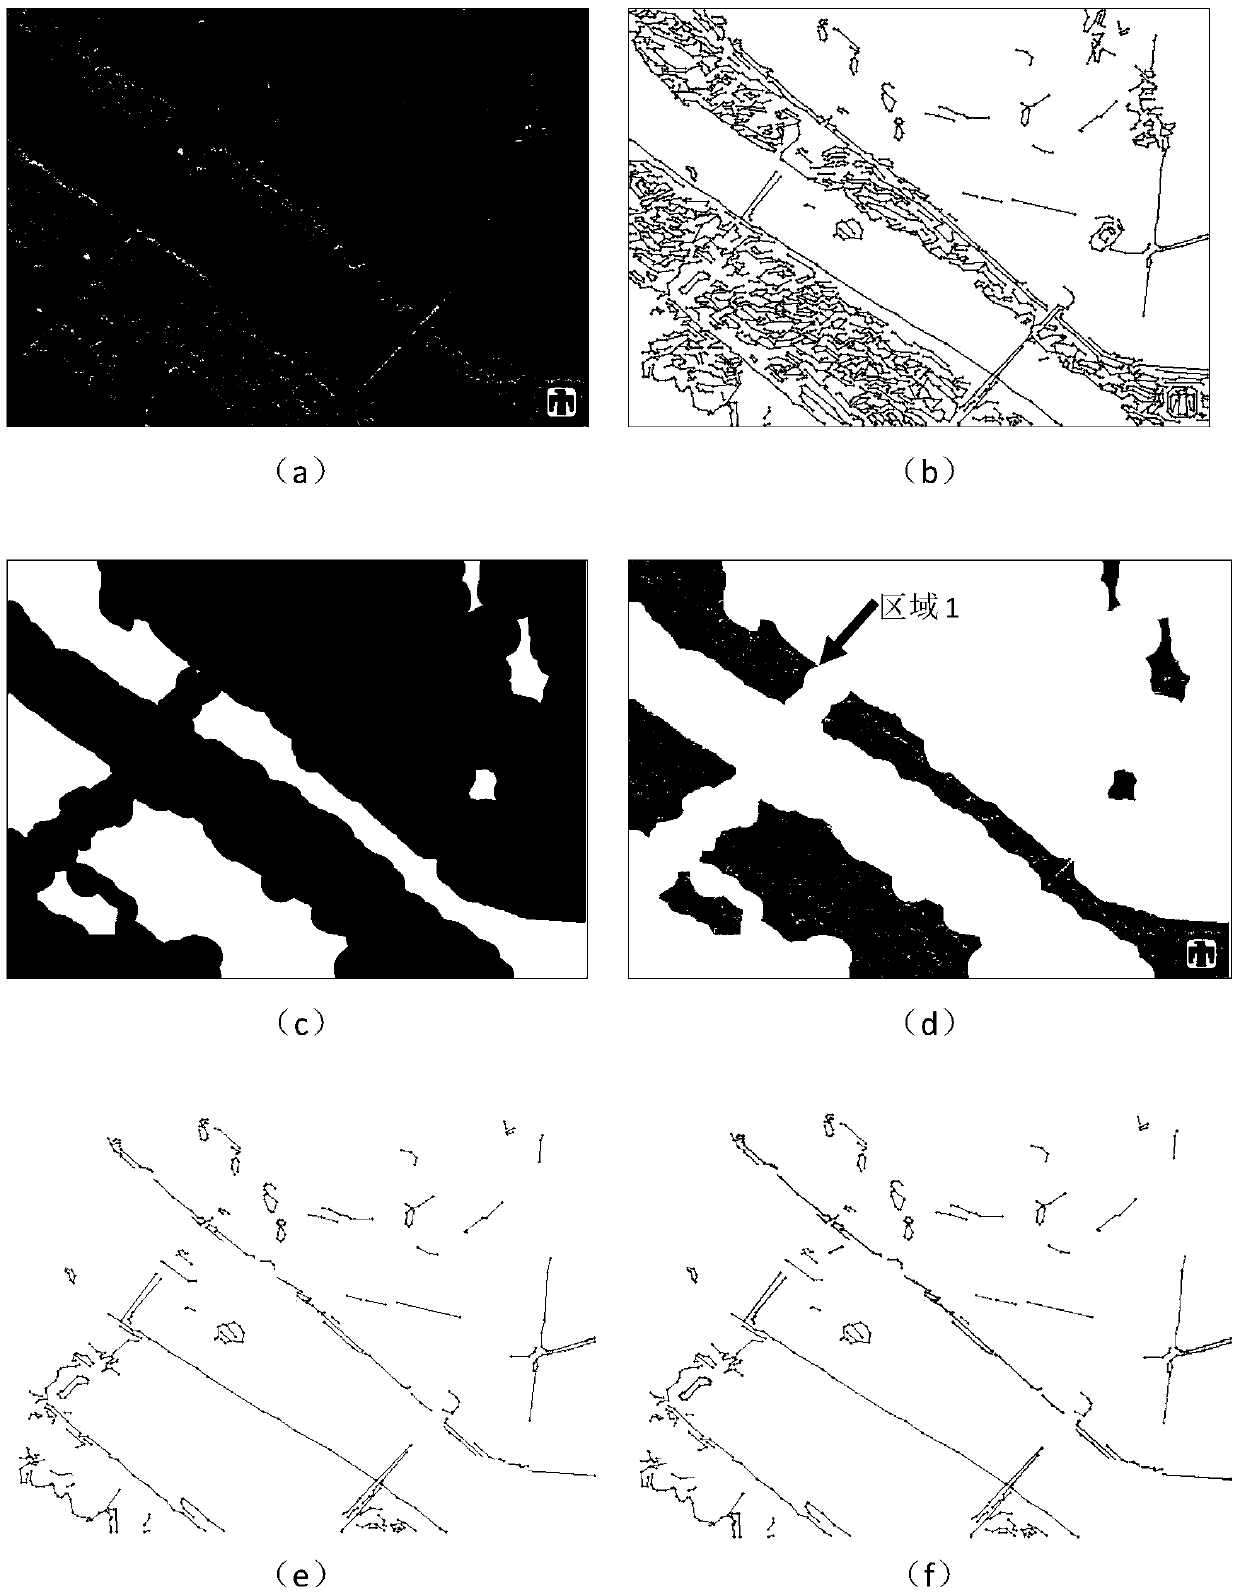 SAR Image Segmentation Method Based on Deconvolution Network and Sketch Direction Constraint